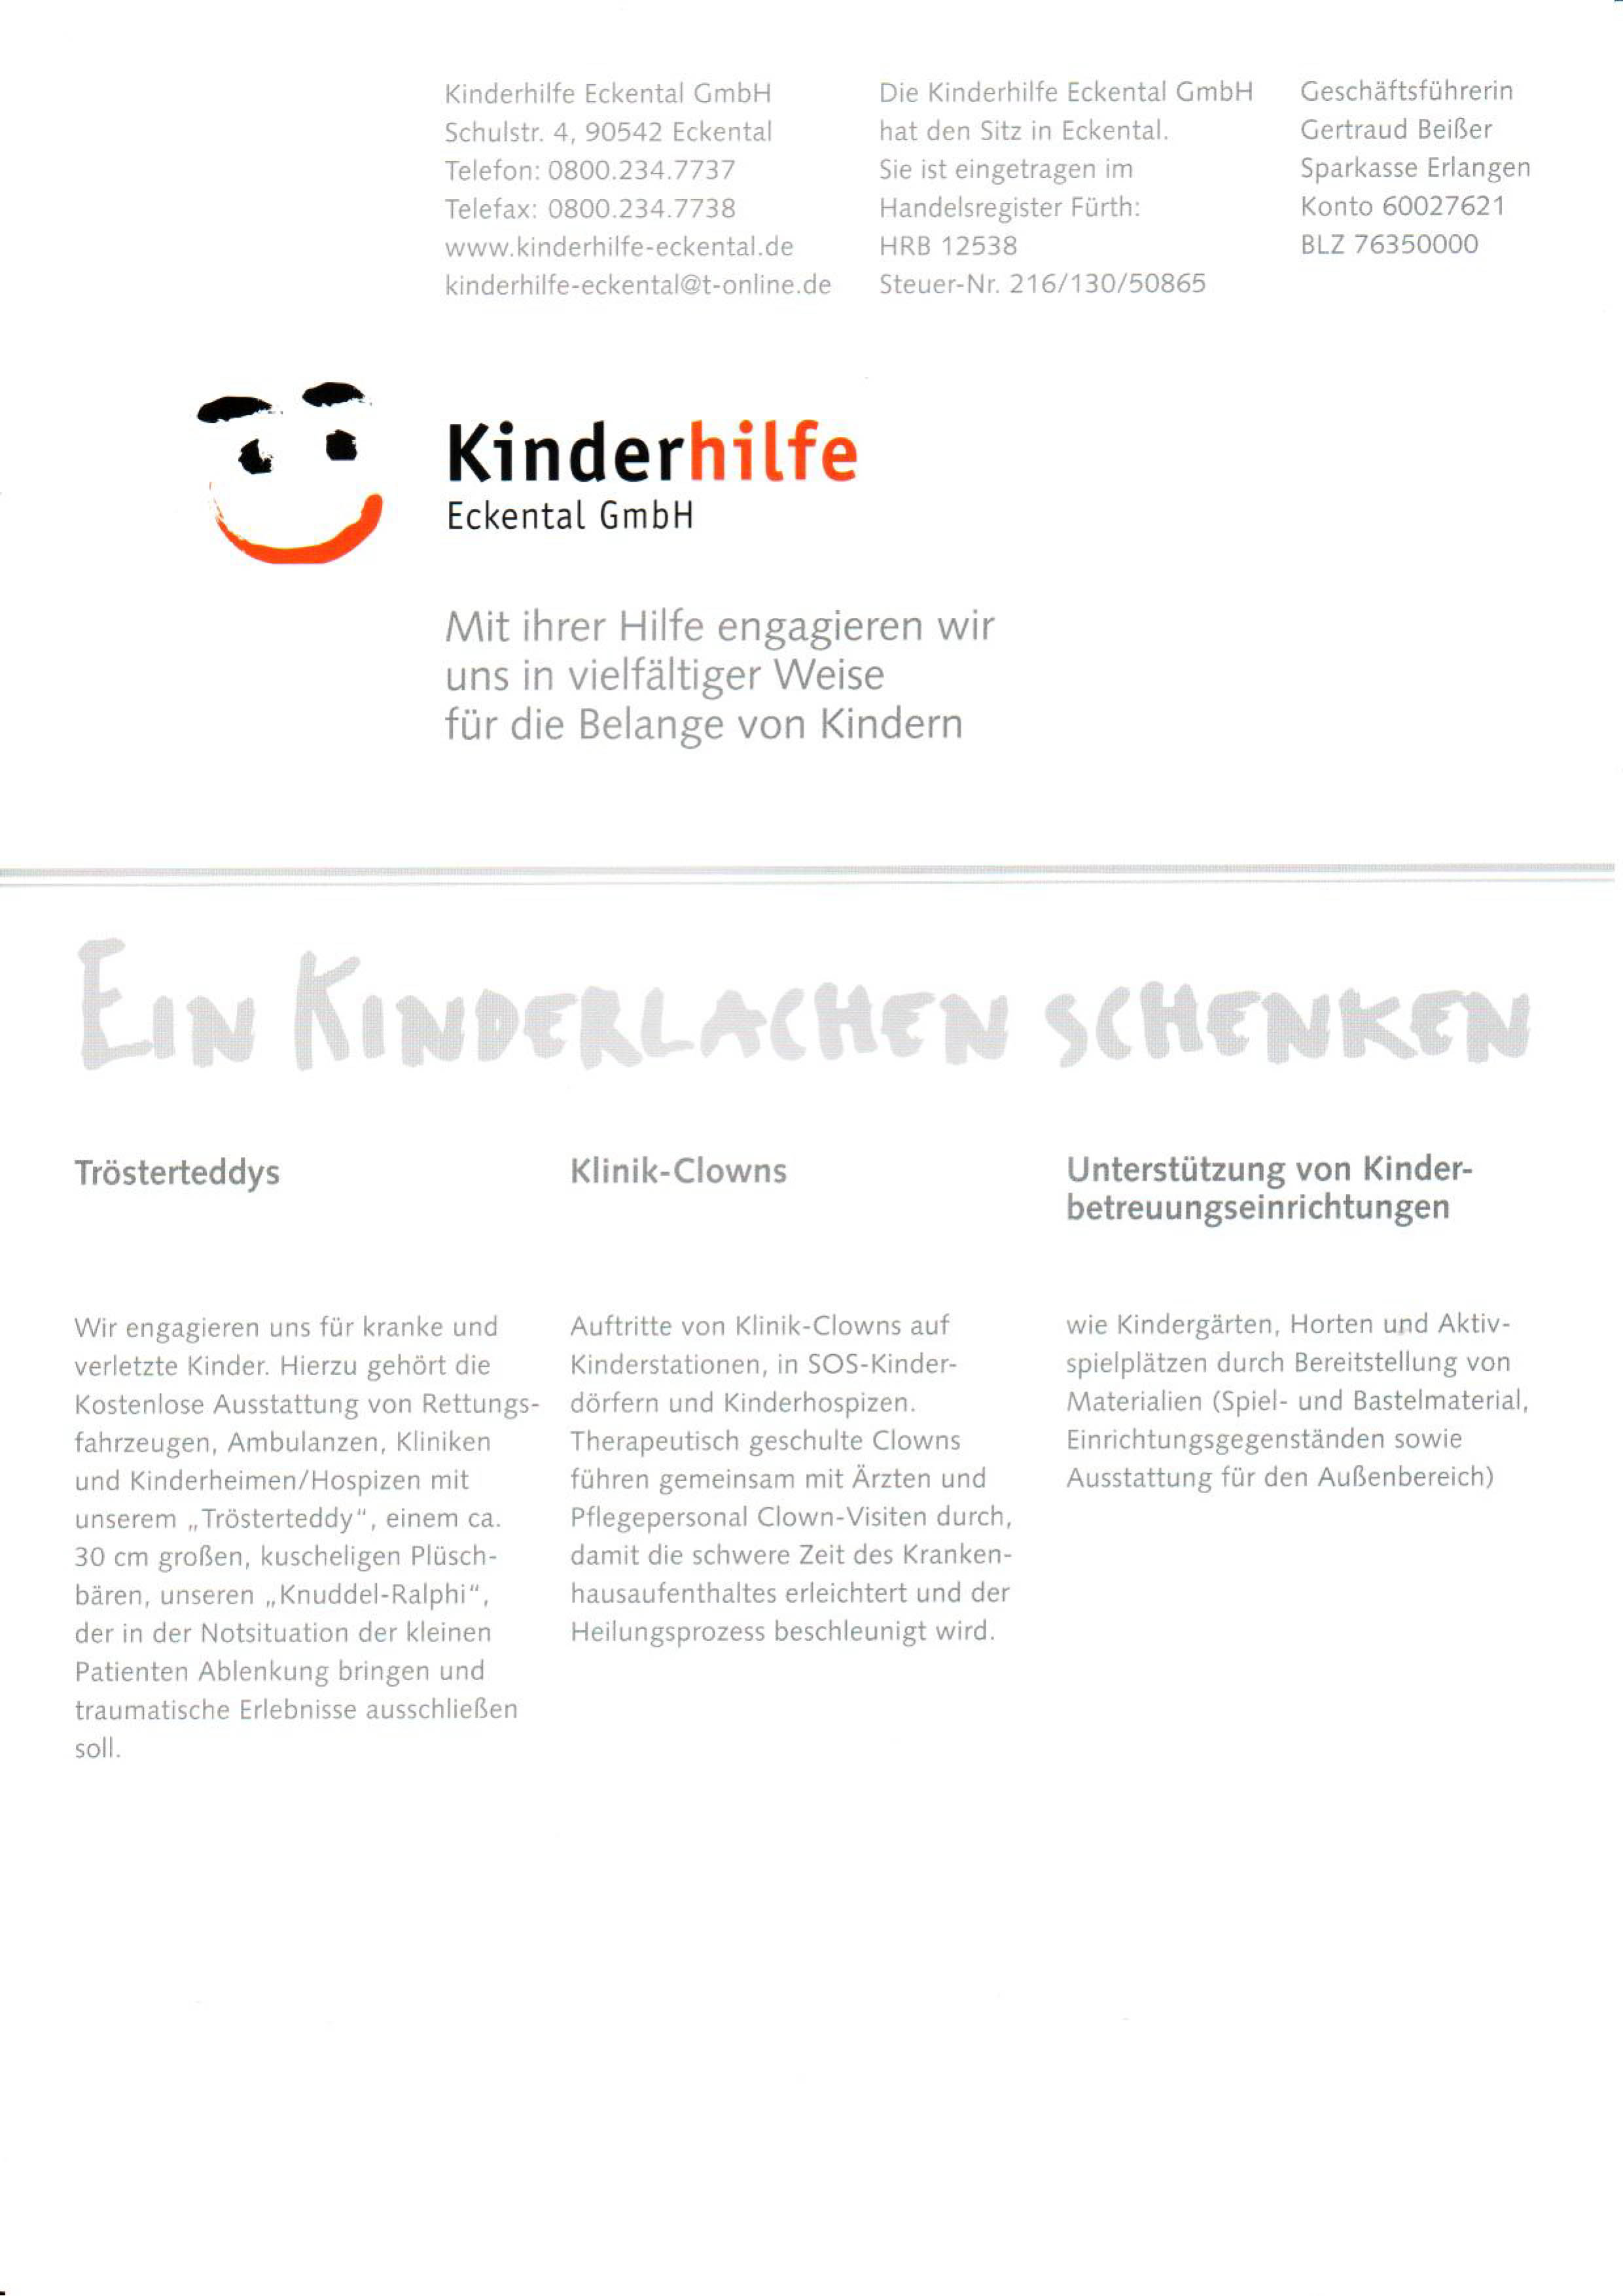 Urkunde Kinderhilfe Eckental GmbH, Trösterteddy